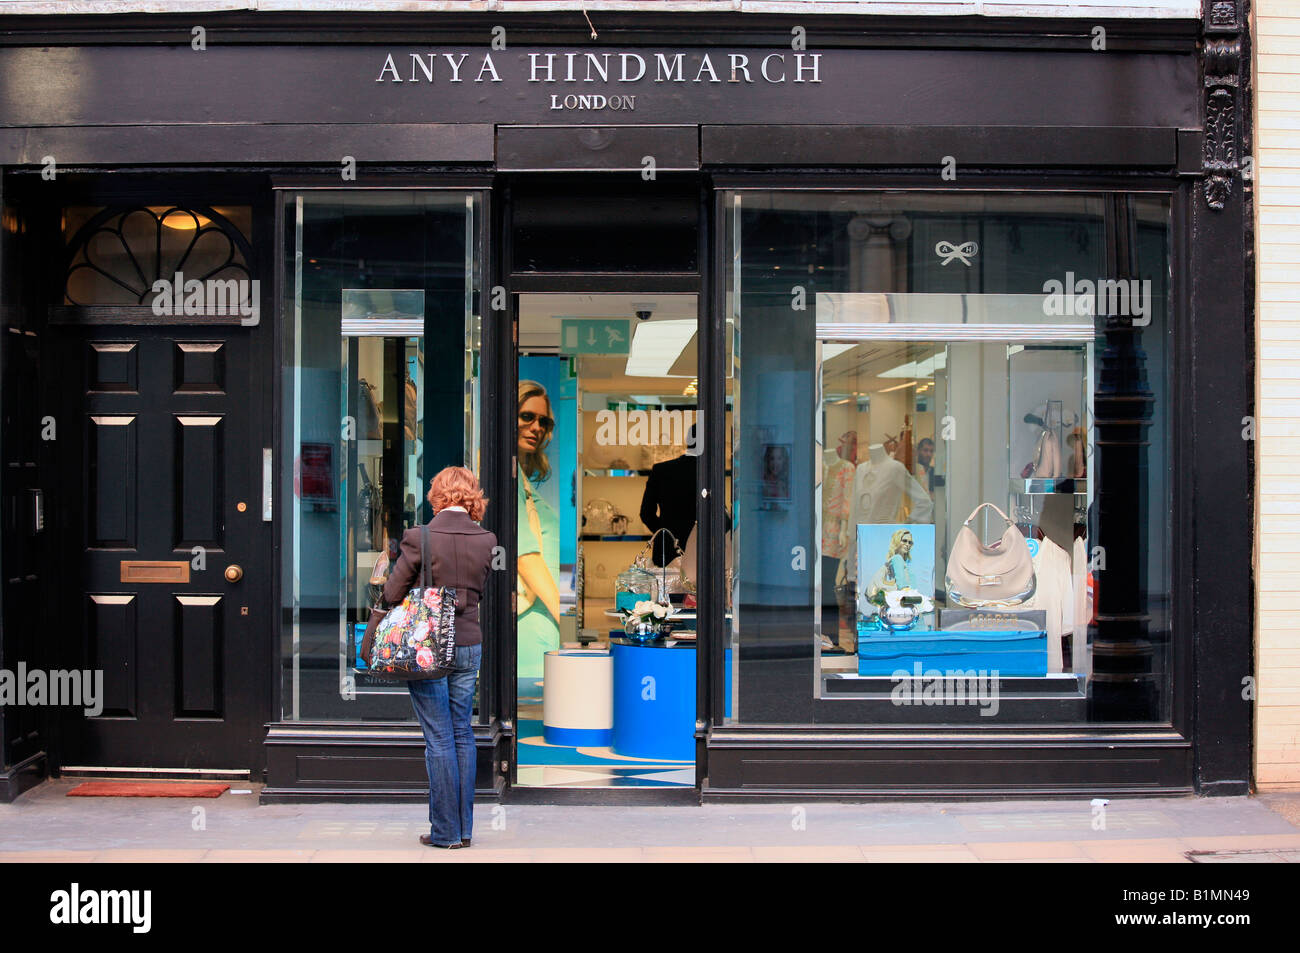 Anya Hindmarch store, London, England Stock Photo - Alamy